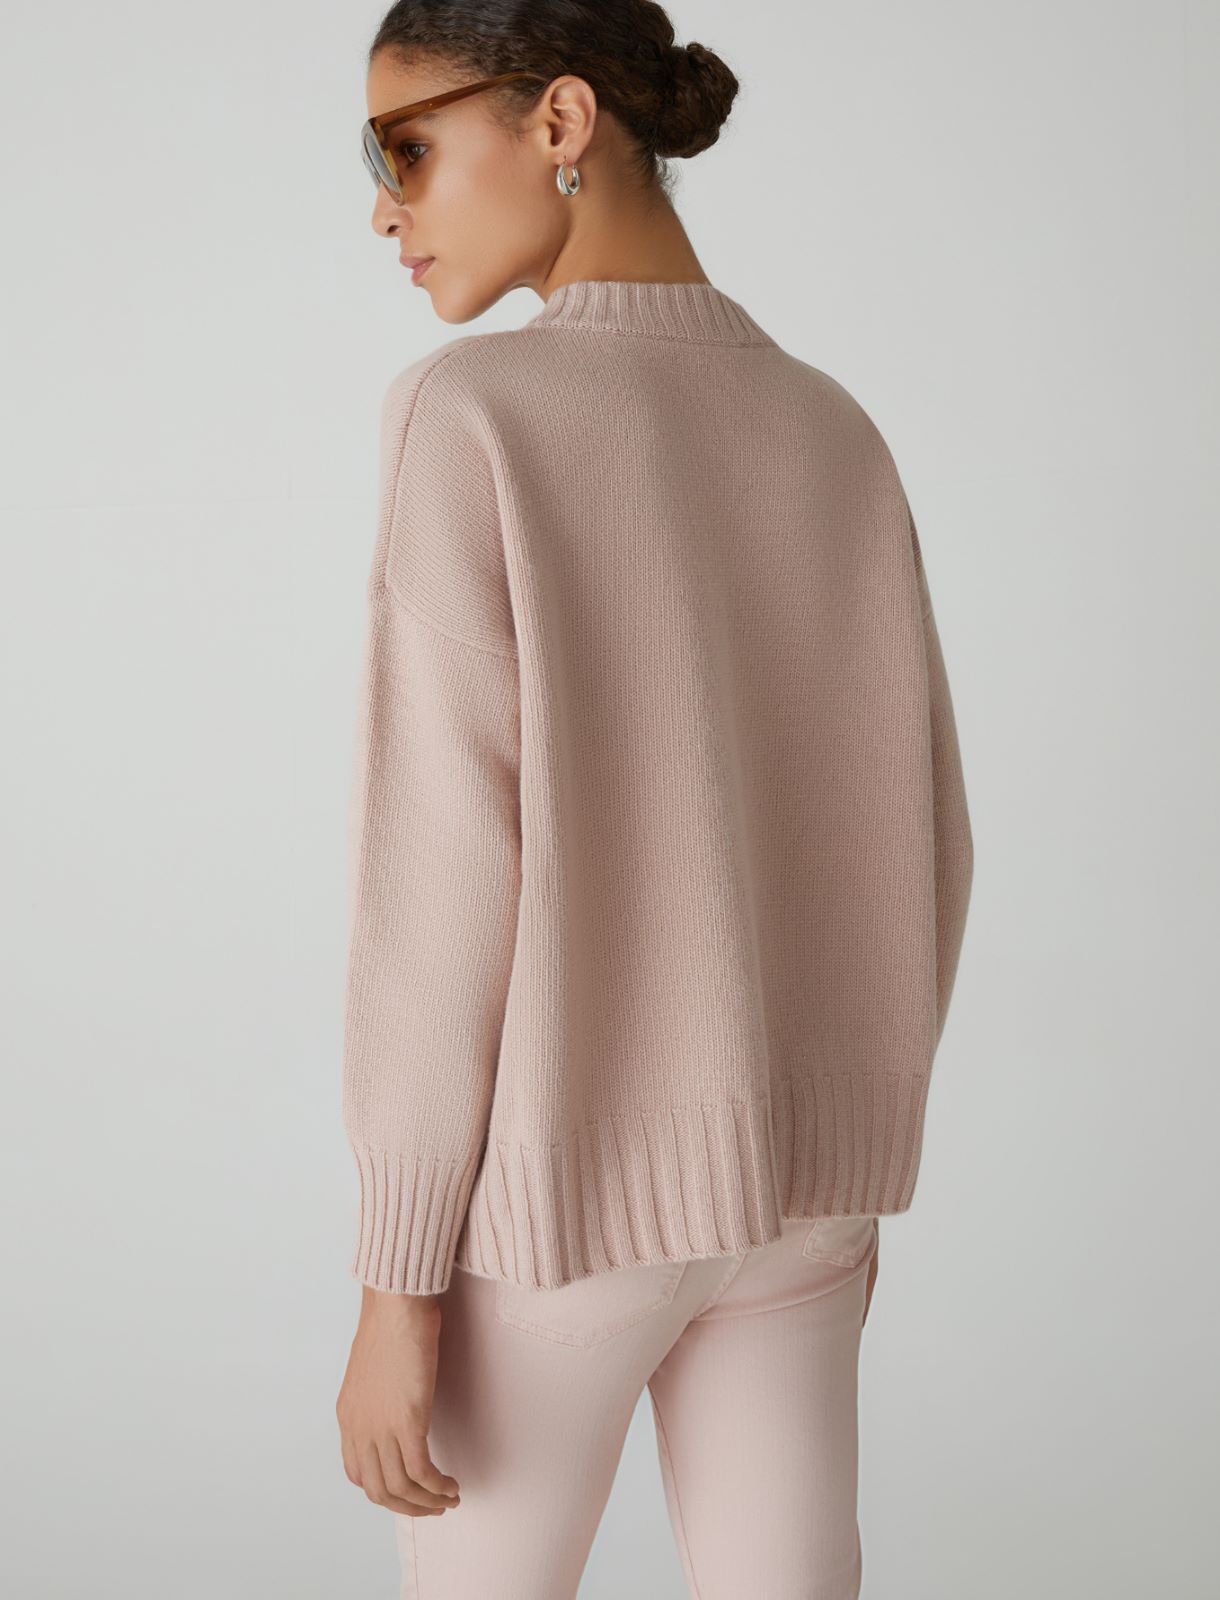 Cashmere-blend sweater - Nudo - Marella - 2